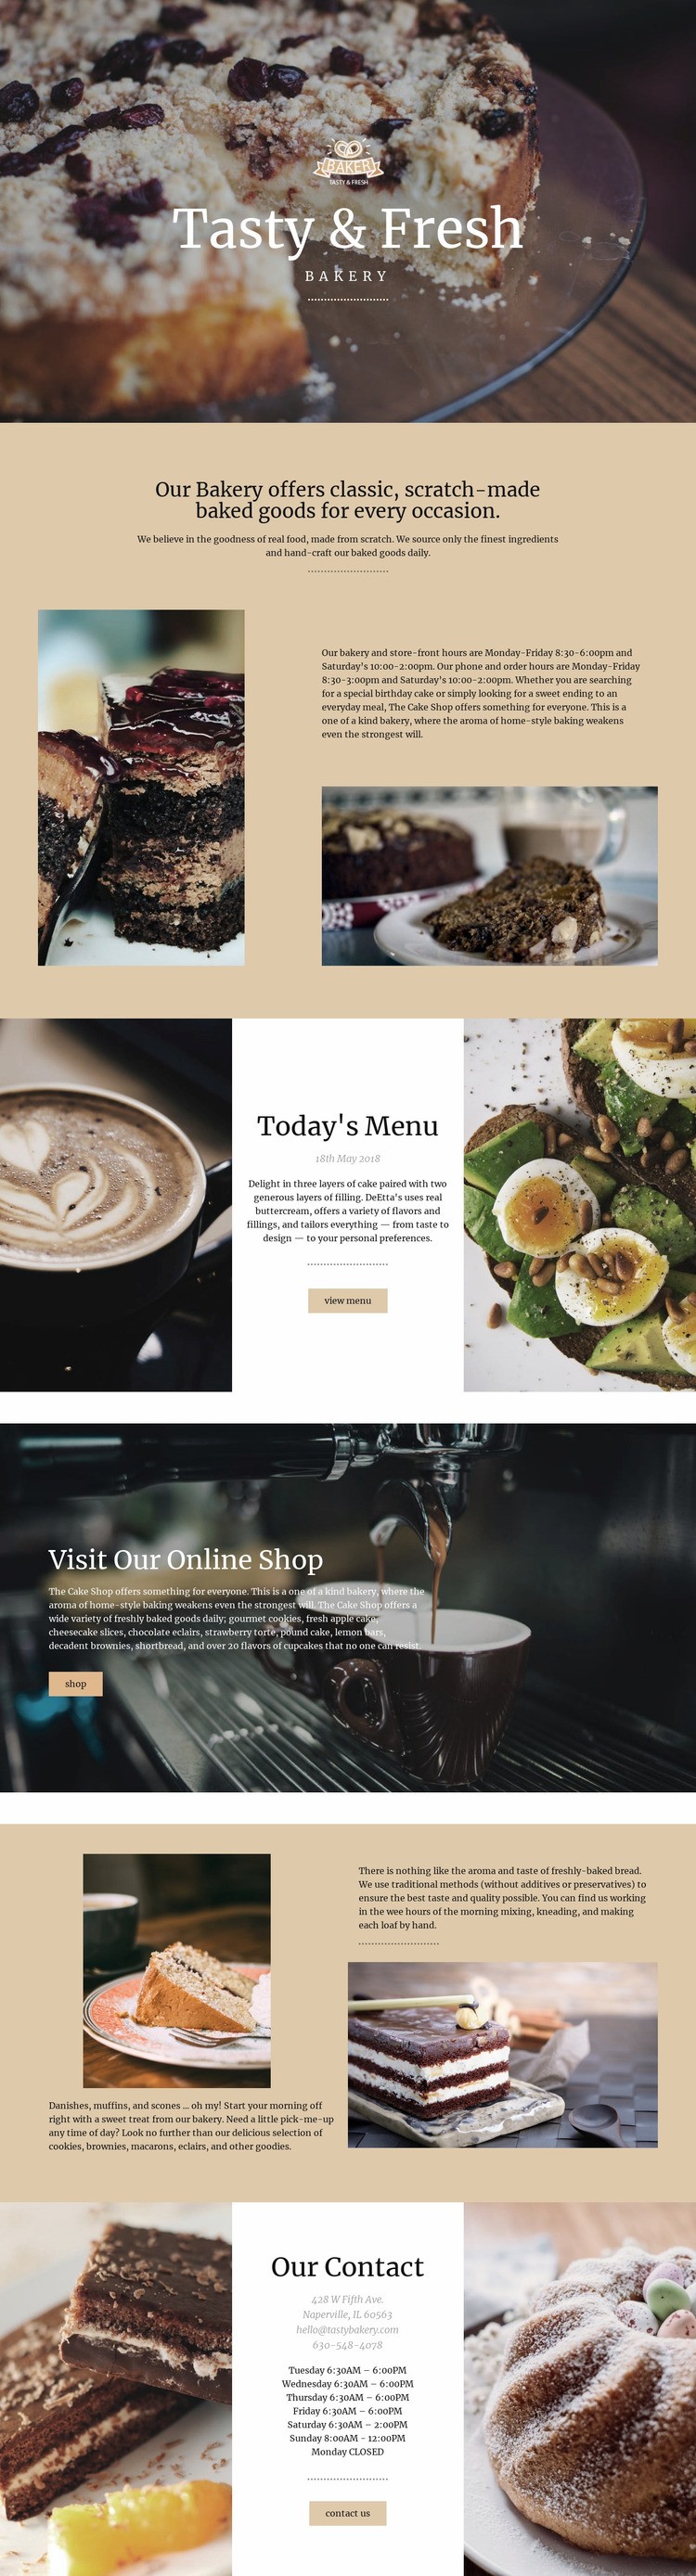 Tasty and fresh food Website Mockup